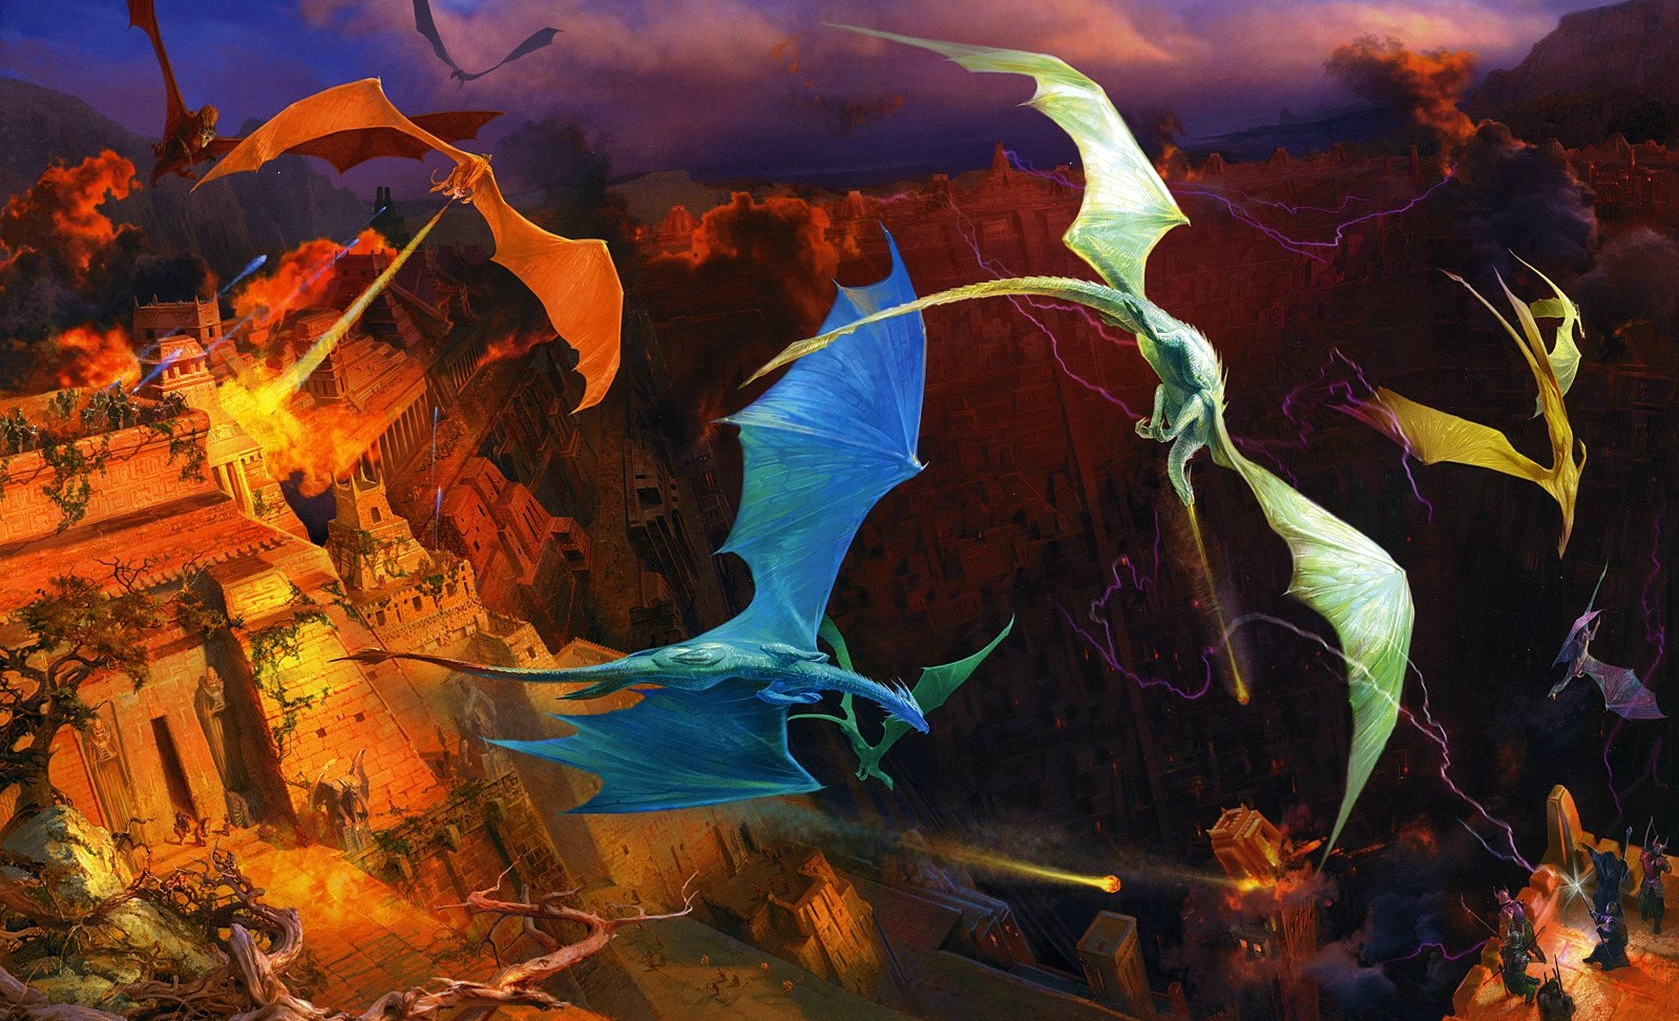 Epic battle between a dragon and warriors in a fantastical world - Vladimir Bondar's desktop wallpaper.